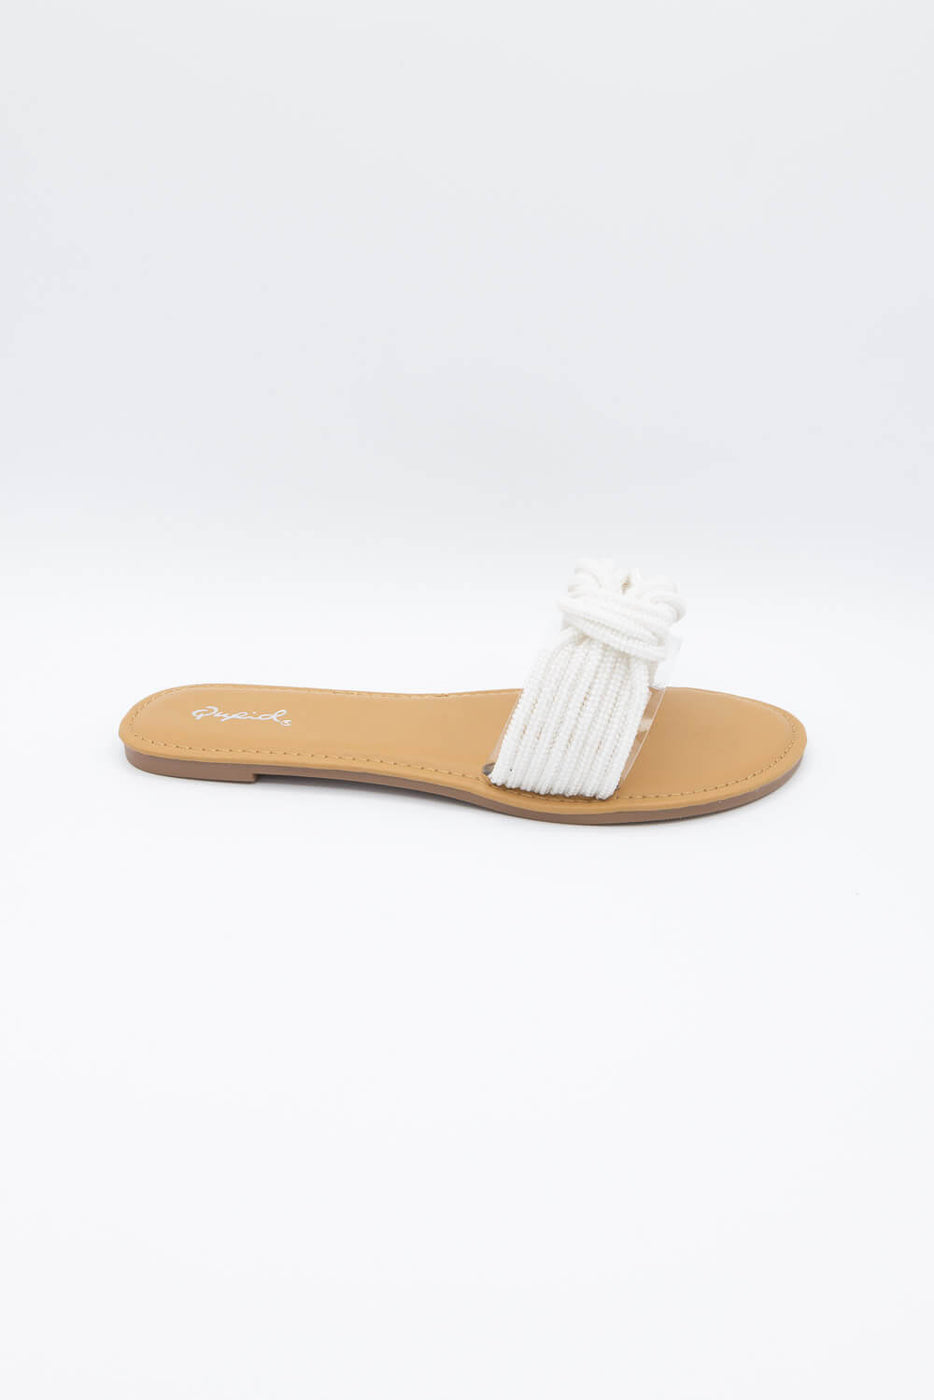 Chic Pearl Slides - Black Sandals - Strappy Sandals - Lulus